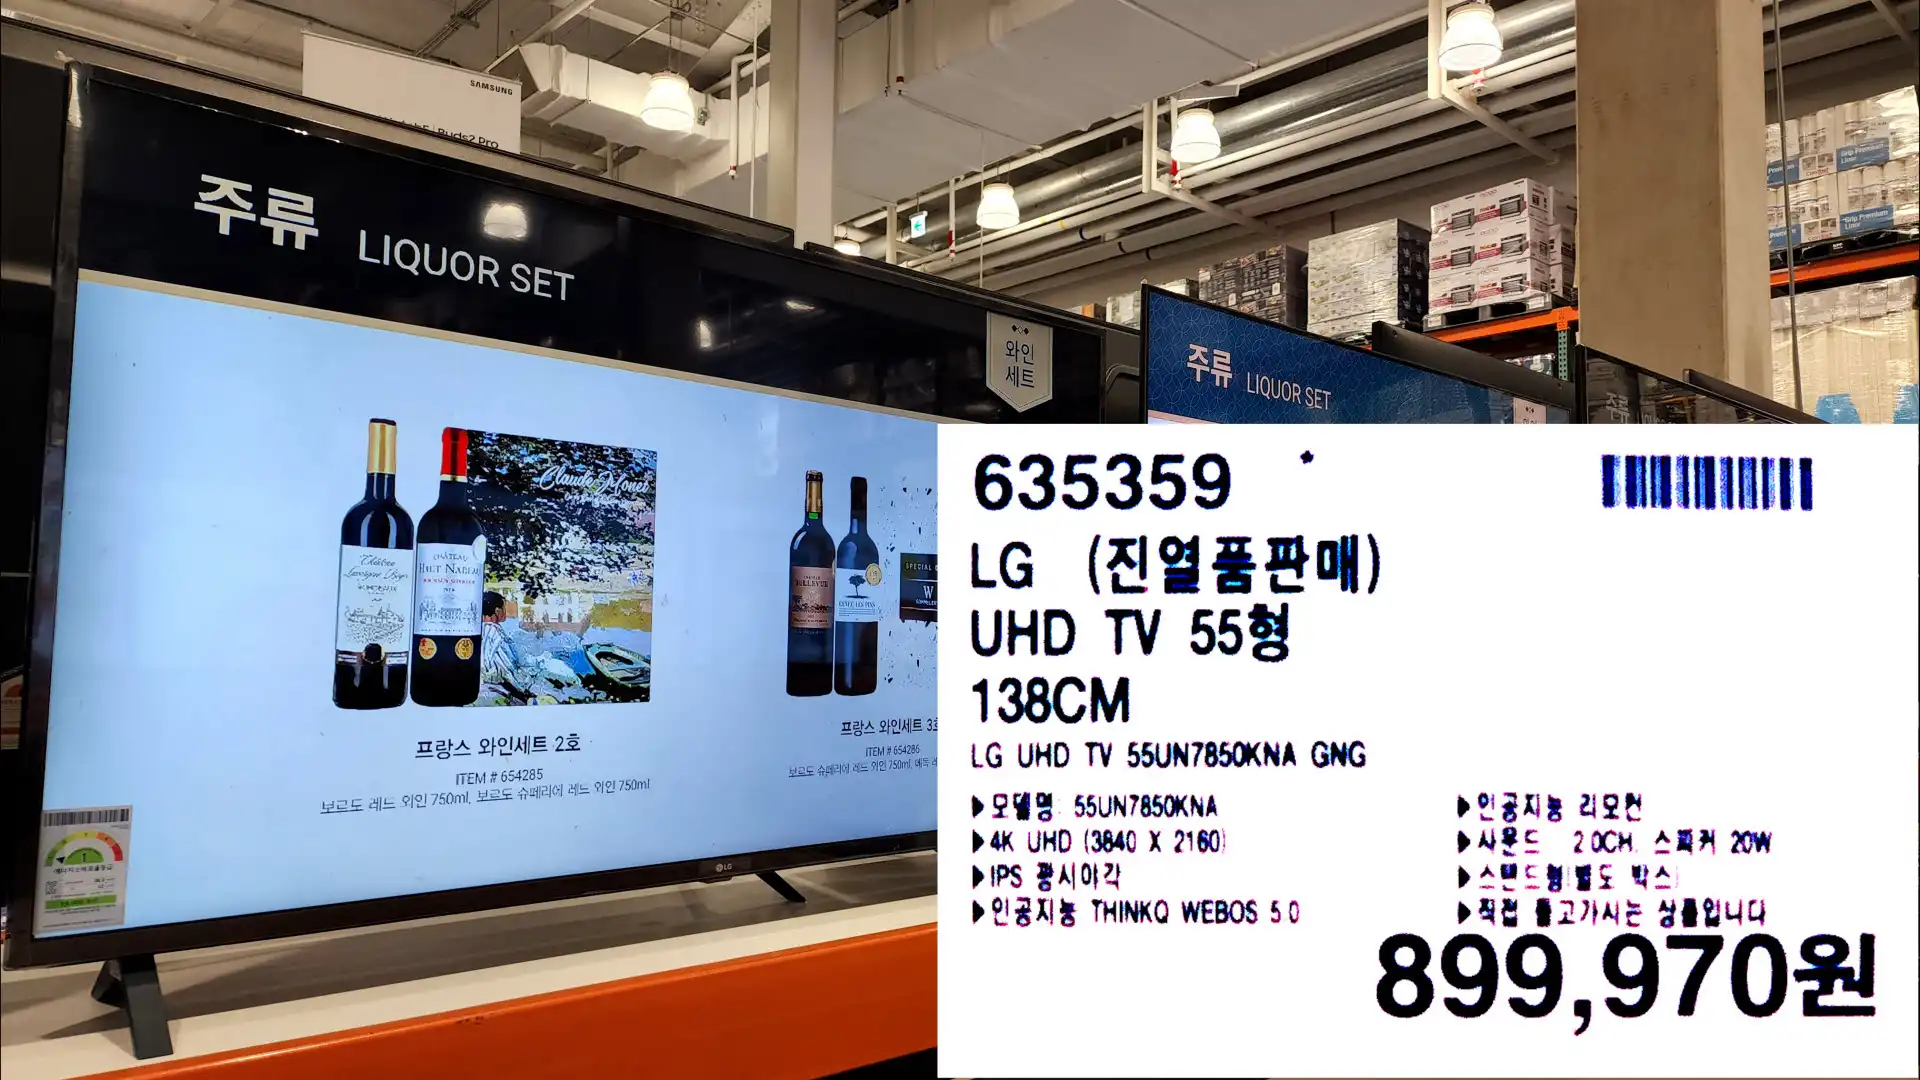 LG (진열품판매)
UHD TV 55형
138CM
LG UHD TV 55UN7850KNA GNG
▶모델명: 55UN7850KNA
▶ 4K UHD(3840 x 2160)
▶IPS 광시야각
▶인공지능 THINKO WEBOS 5.0
▶인공지능 리모컨
▶사운드 20CH. 스피커 20W
▶스탠드형 별도 박스)
▶직접 들고가시는 상품입니다.
899&#44;970원